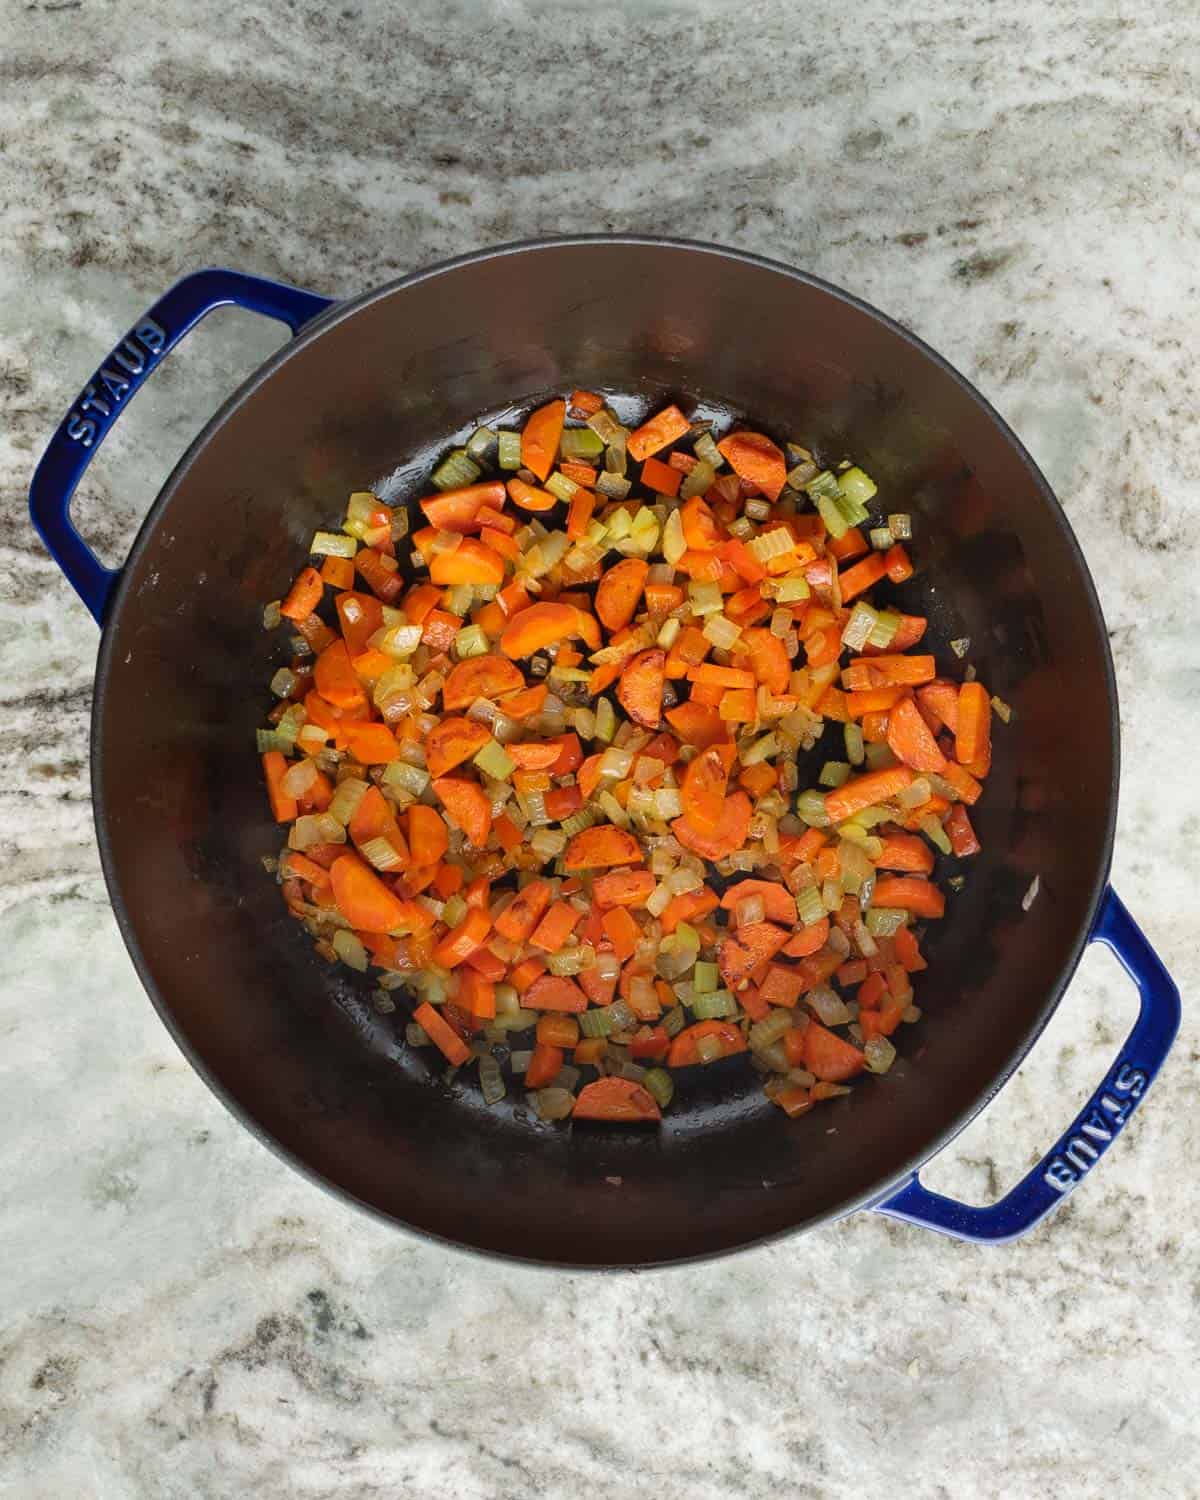 Caramelized vegetables in a large pot.